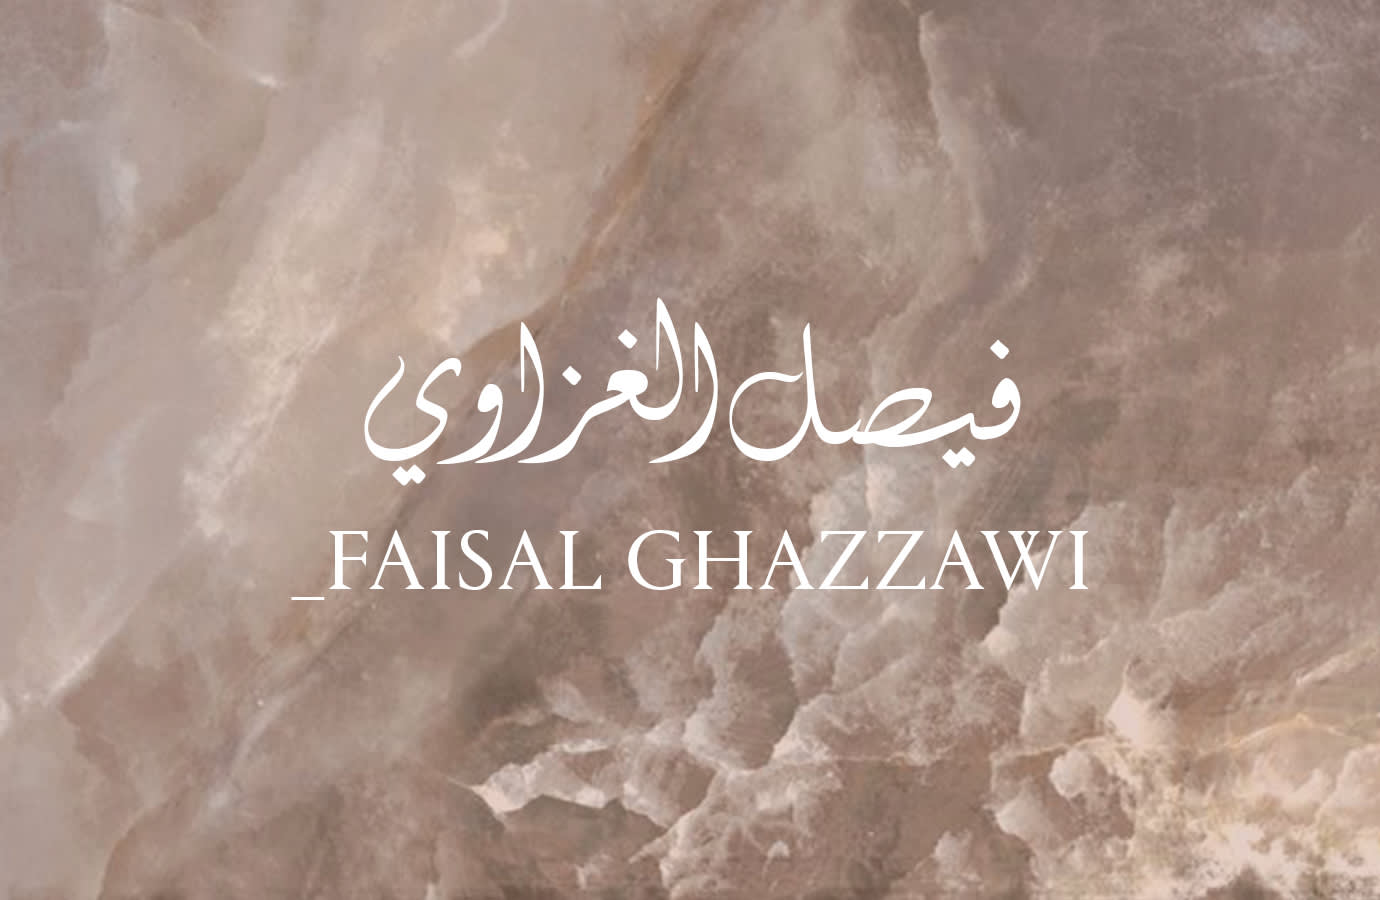 Faisal Ghazzawi TEXT ONLY LP